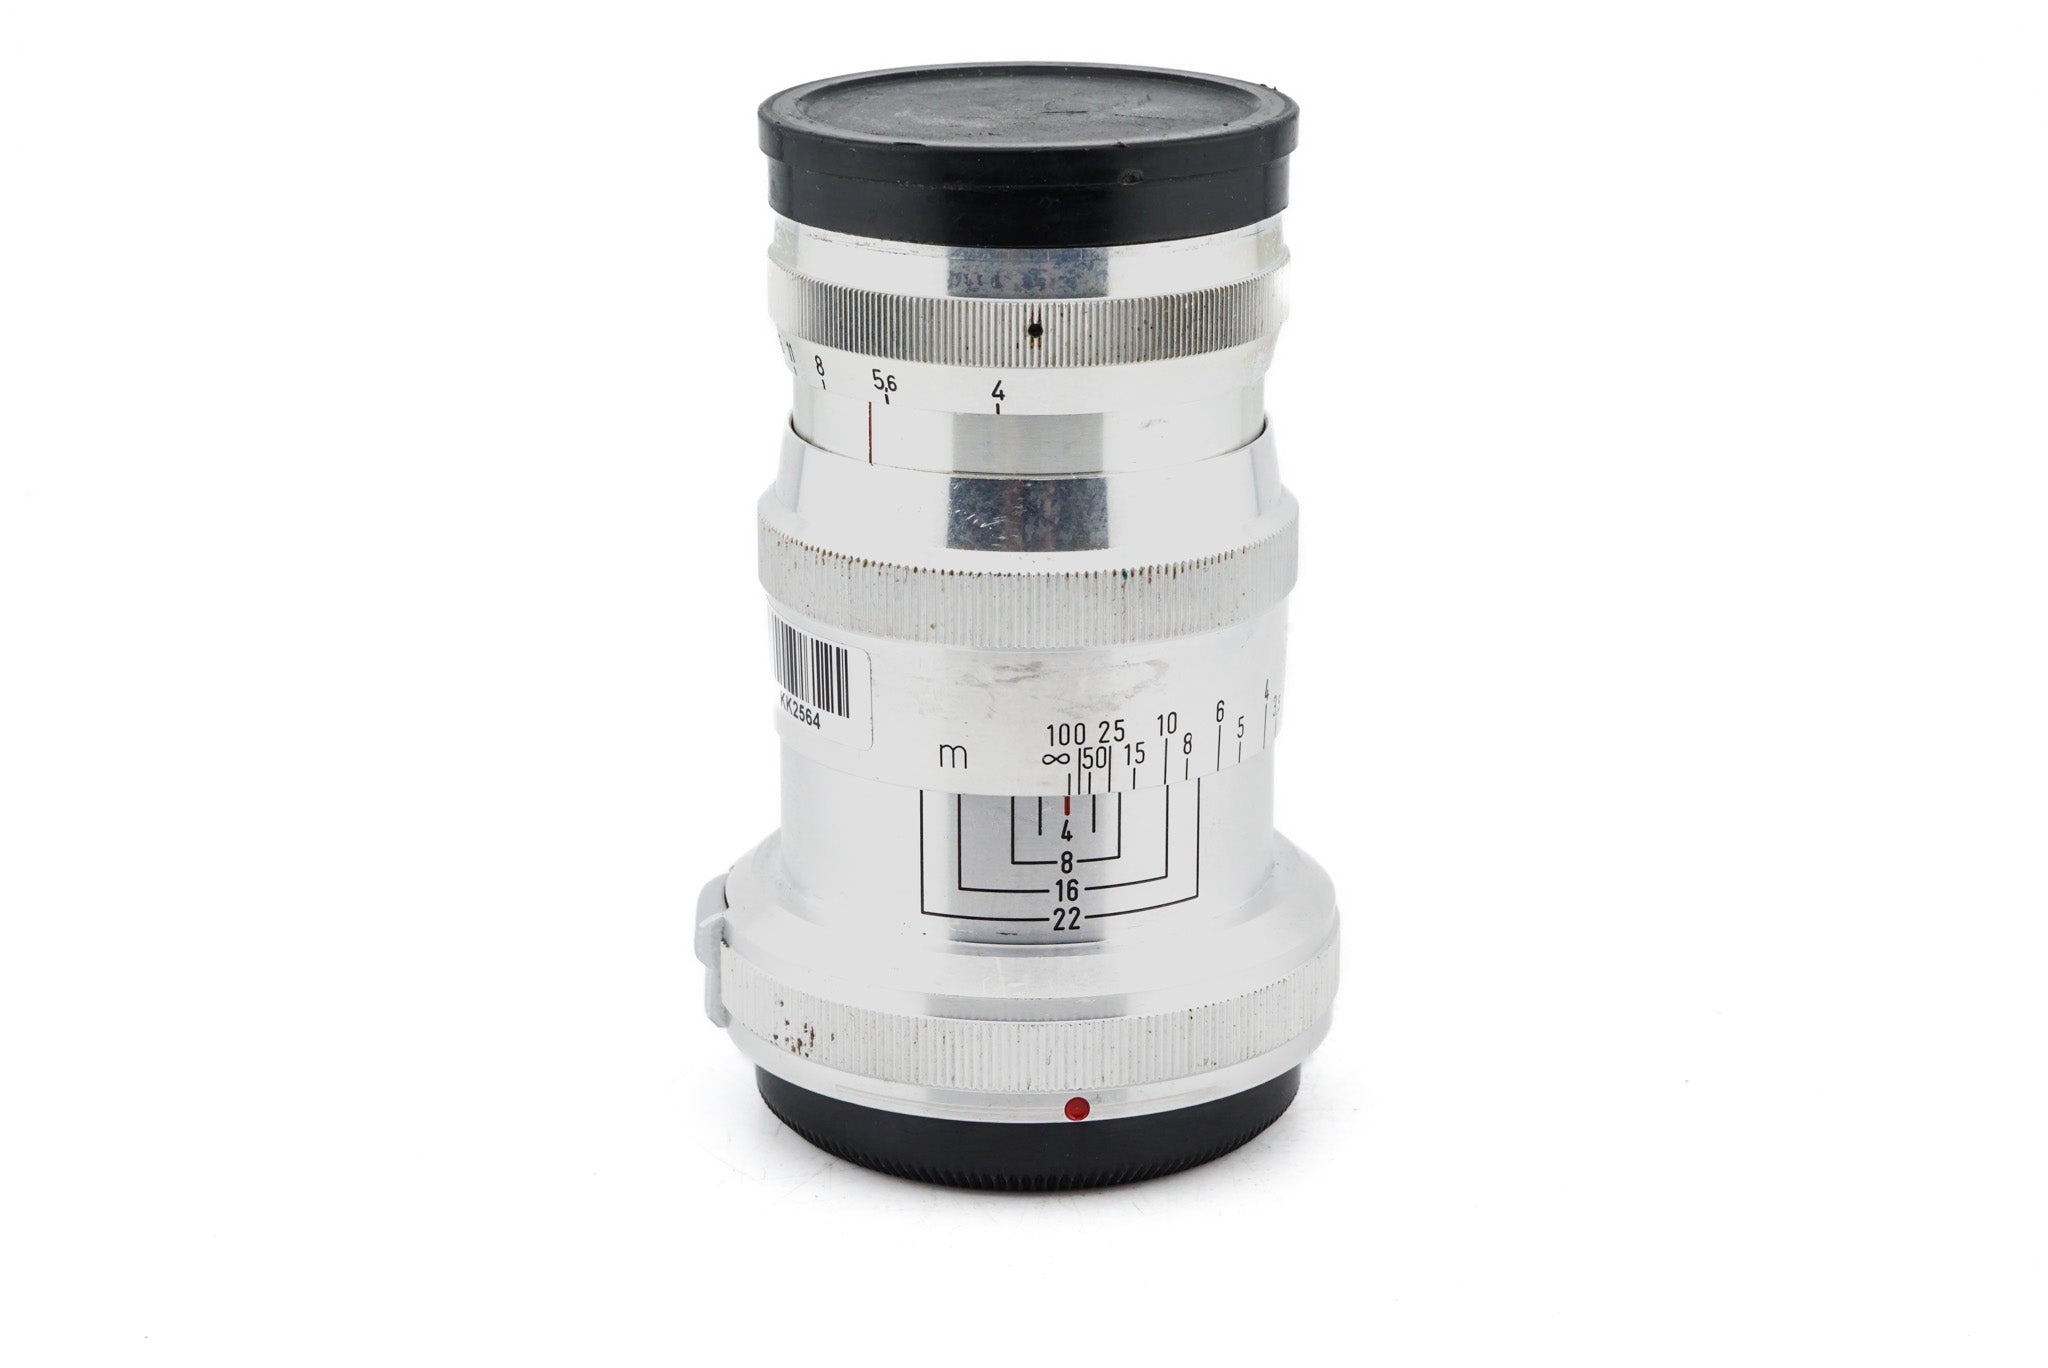 Carl Zeiss 85mm f4 Triotar - Lens